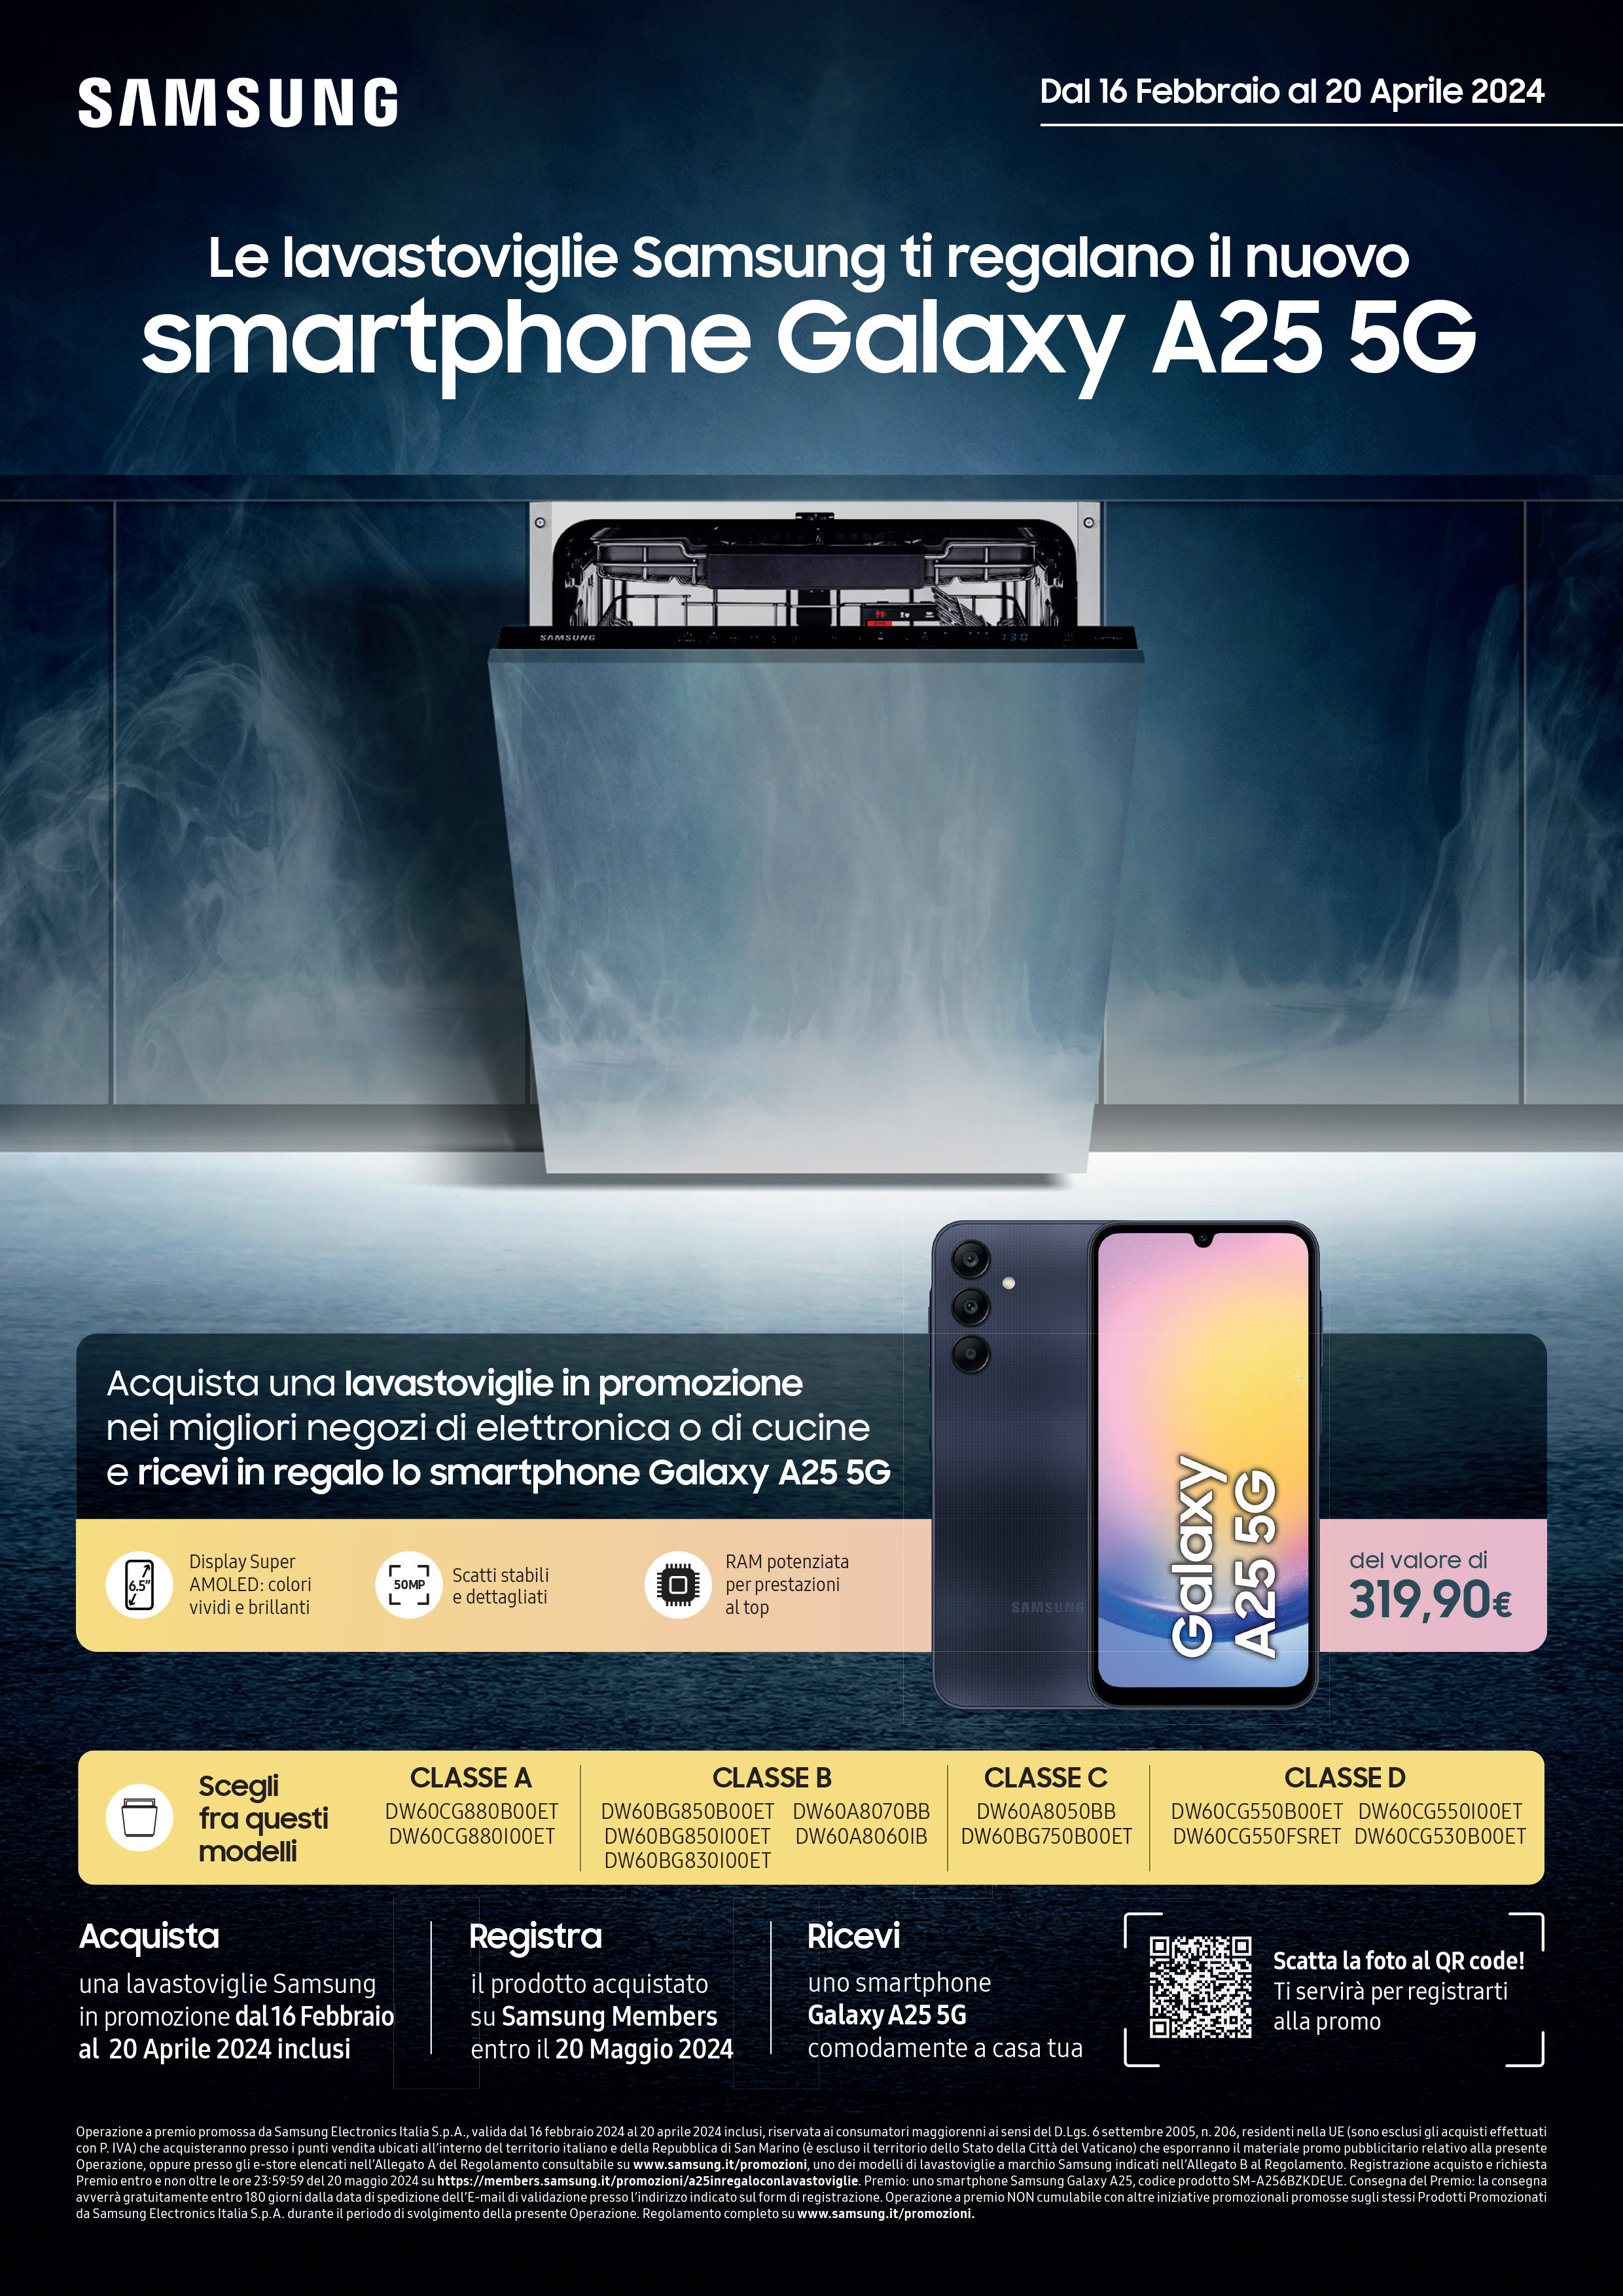 Promo Samsung Lavastovigle bundle Galaxy A25 A4.jpg